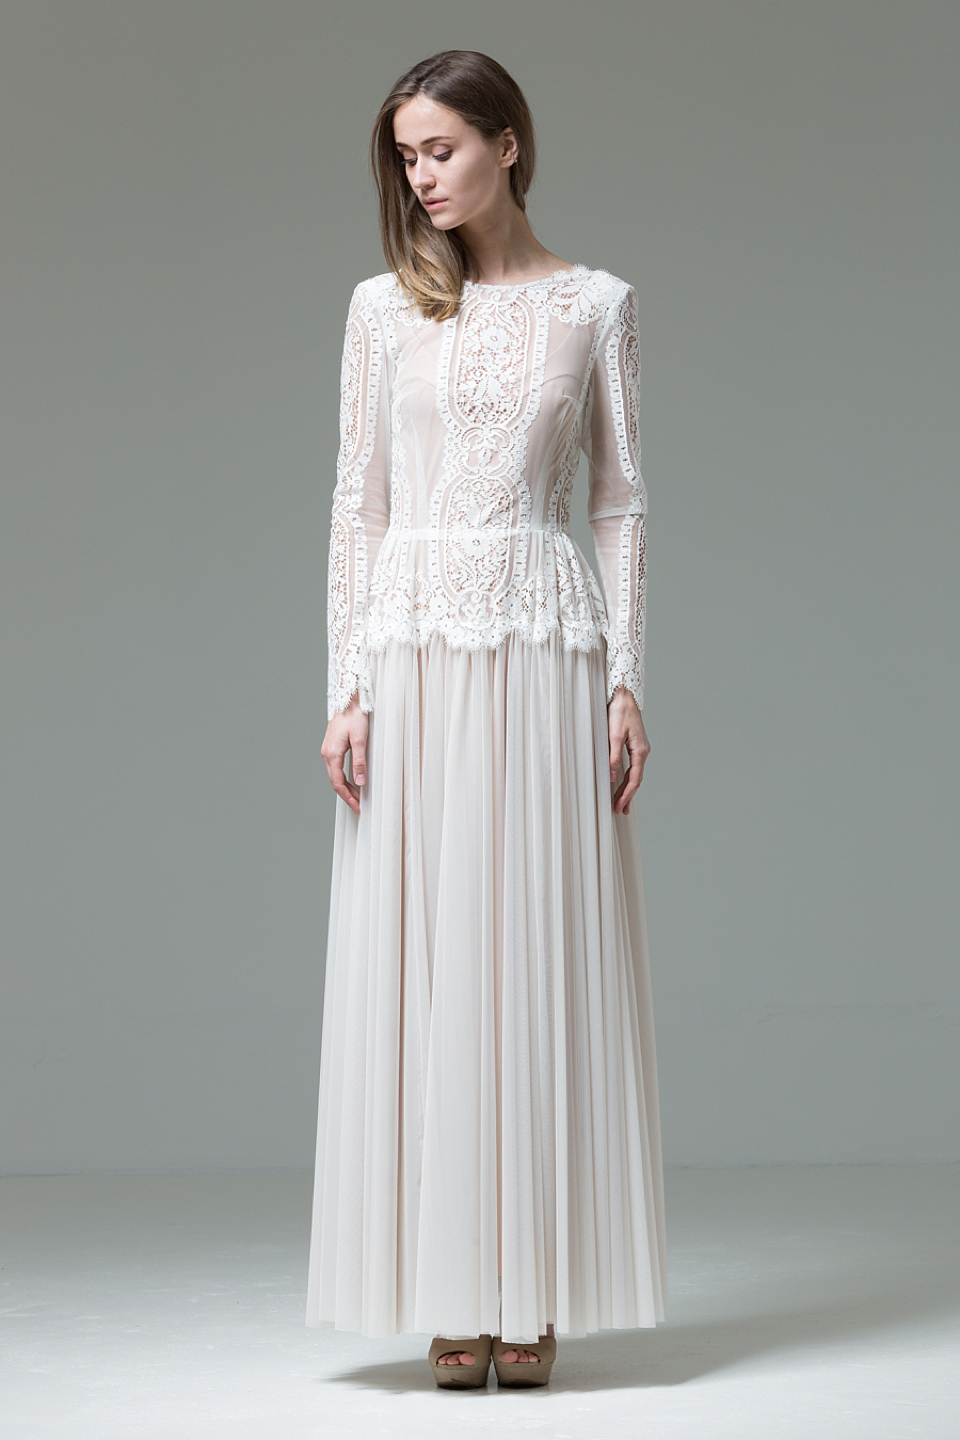 Katya Katya Shehurina: Strength & Beauty In Bridal Gown Design | Love ...